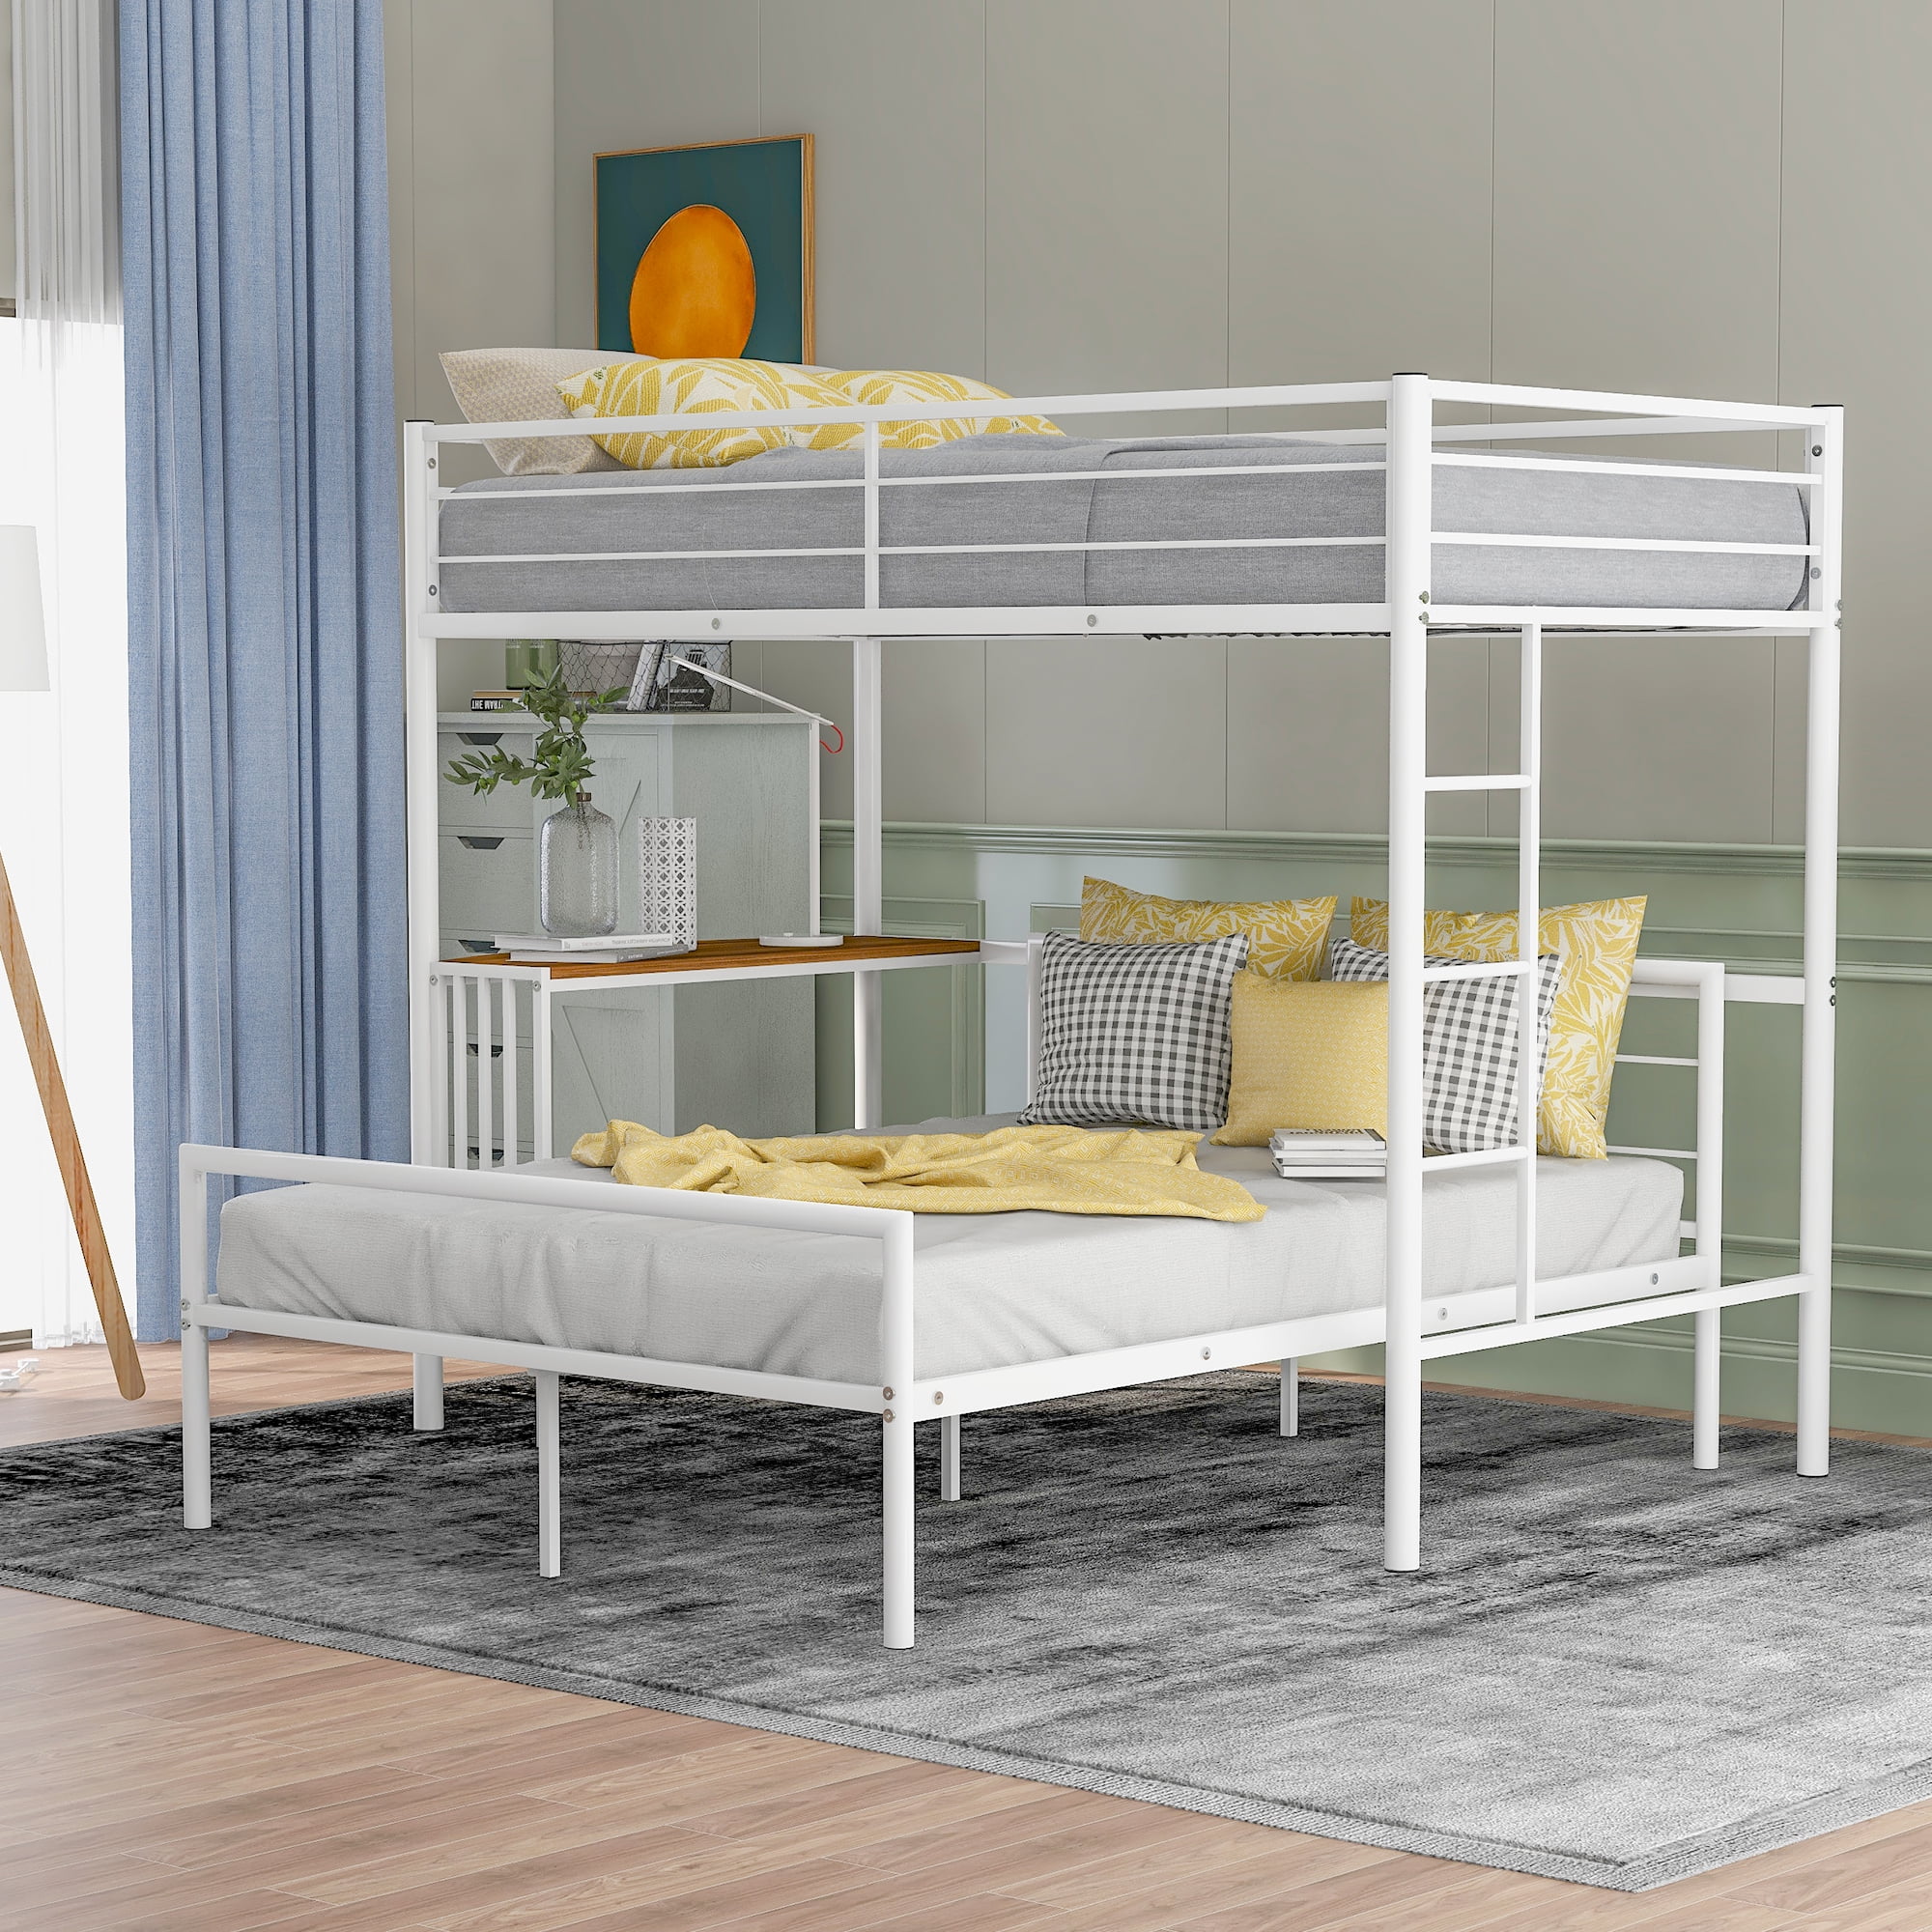 Full Bunk Bed Sy Metal, Metal Bunk Beds That Separate